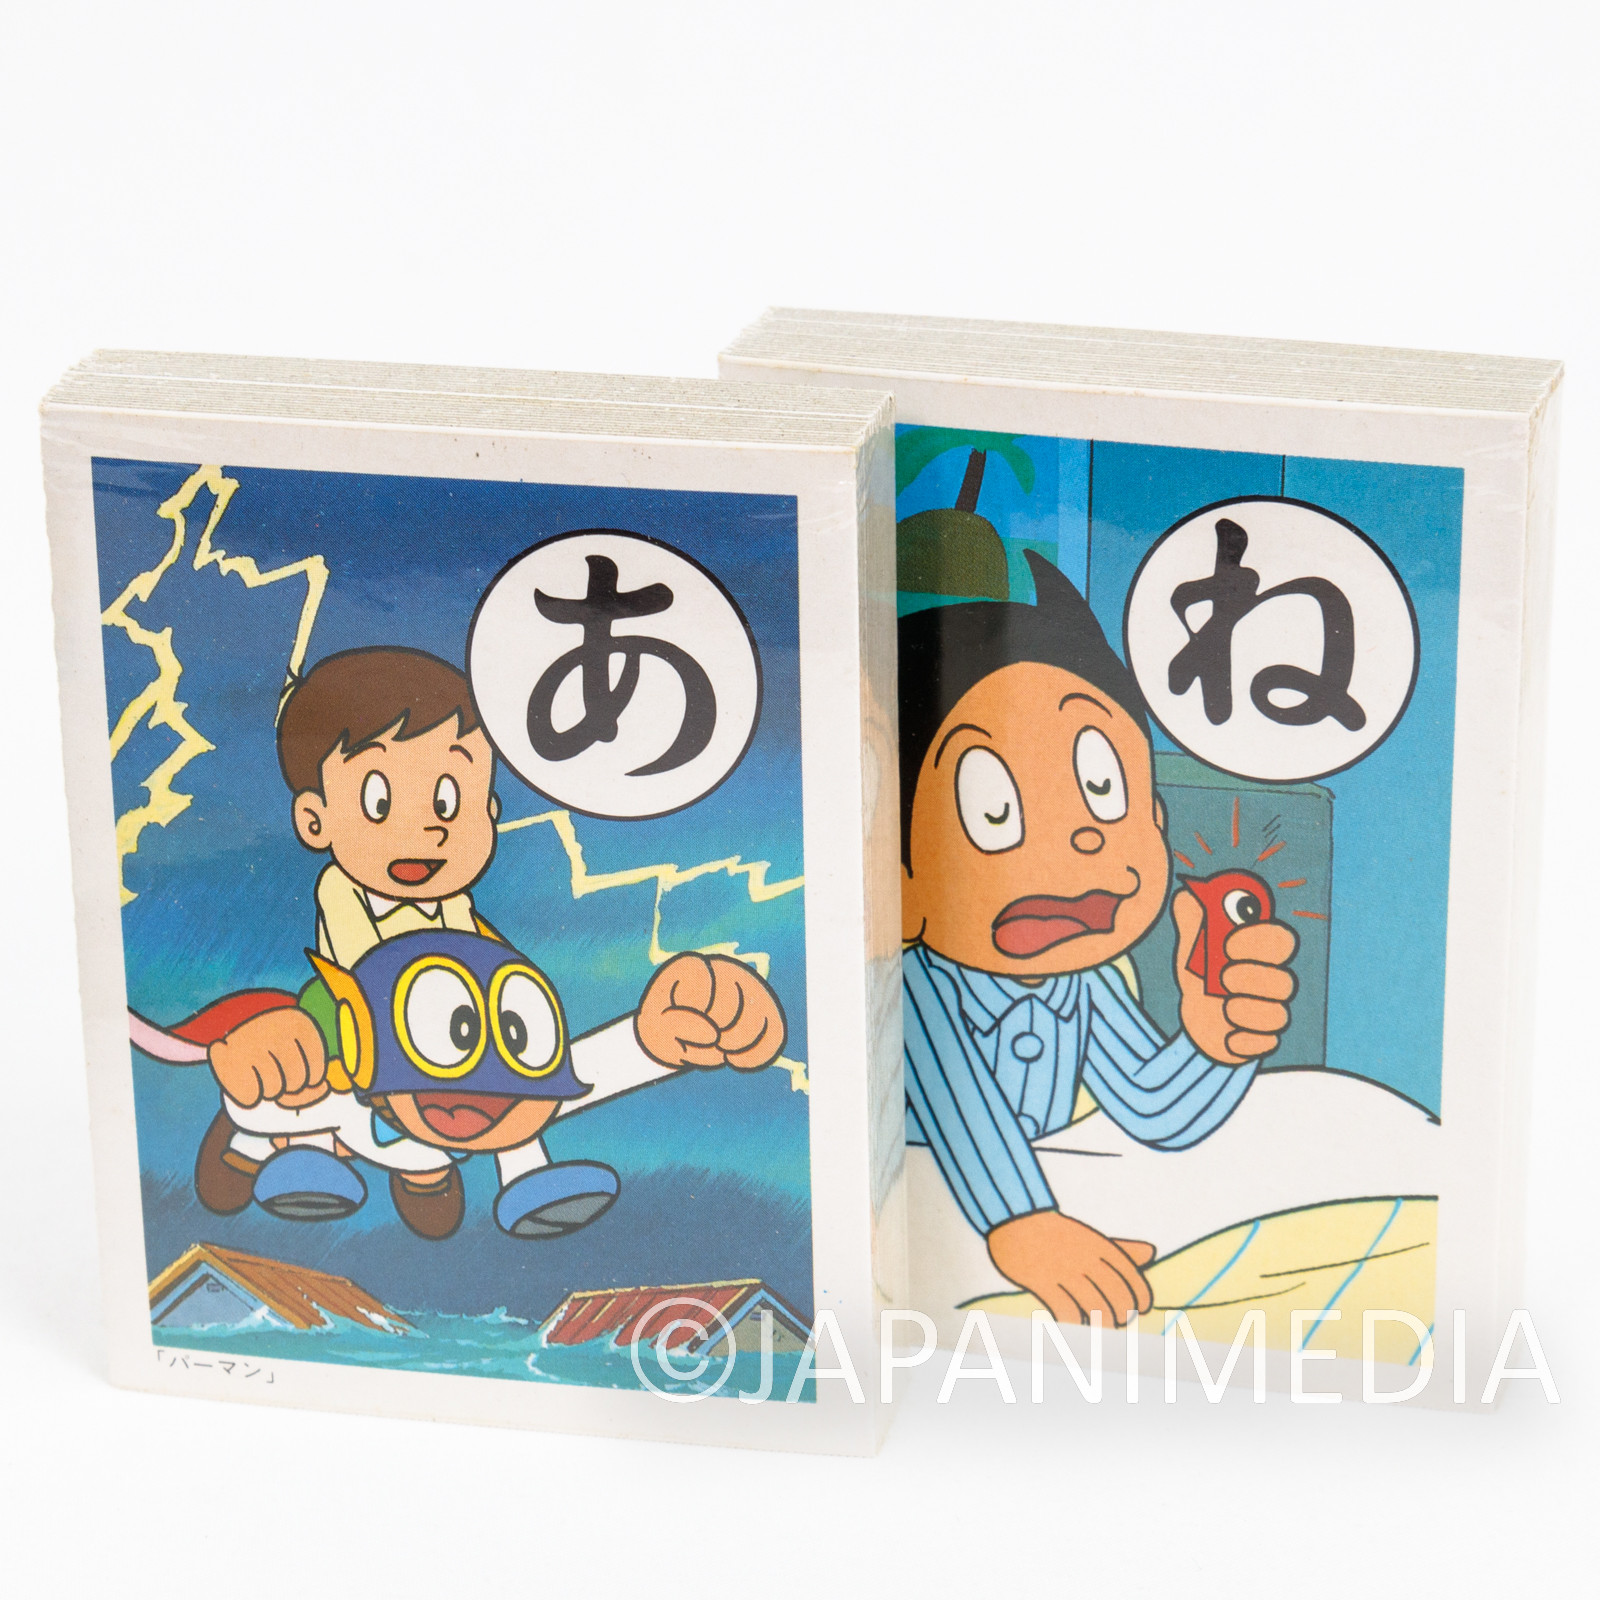 Perman Karuta Traditional Japanese playing cards Fujiko F Fujio